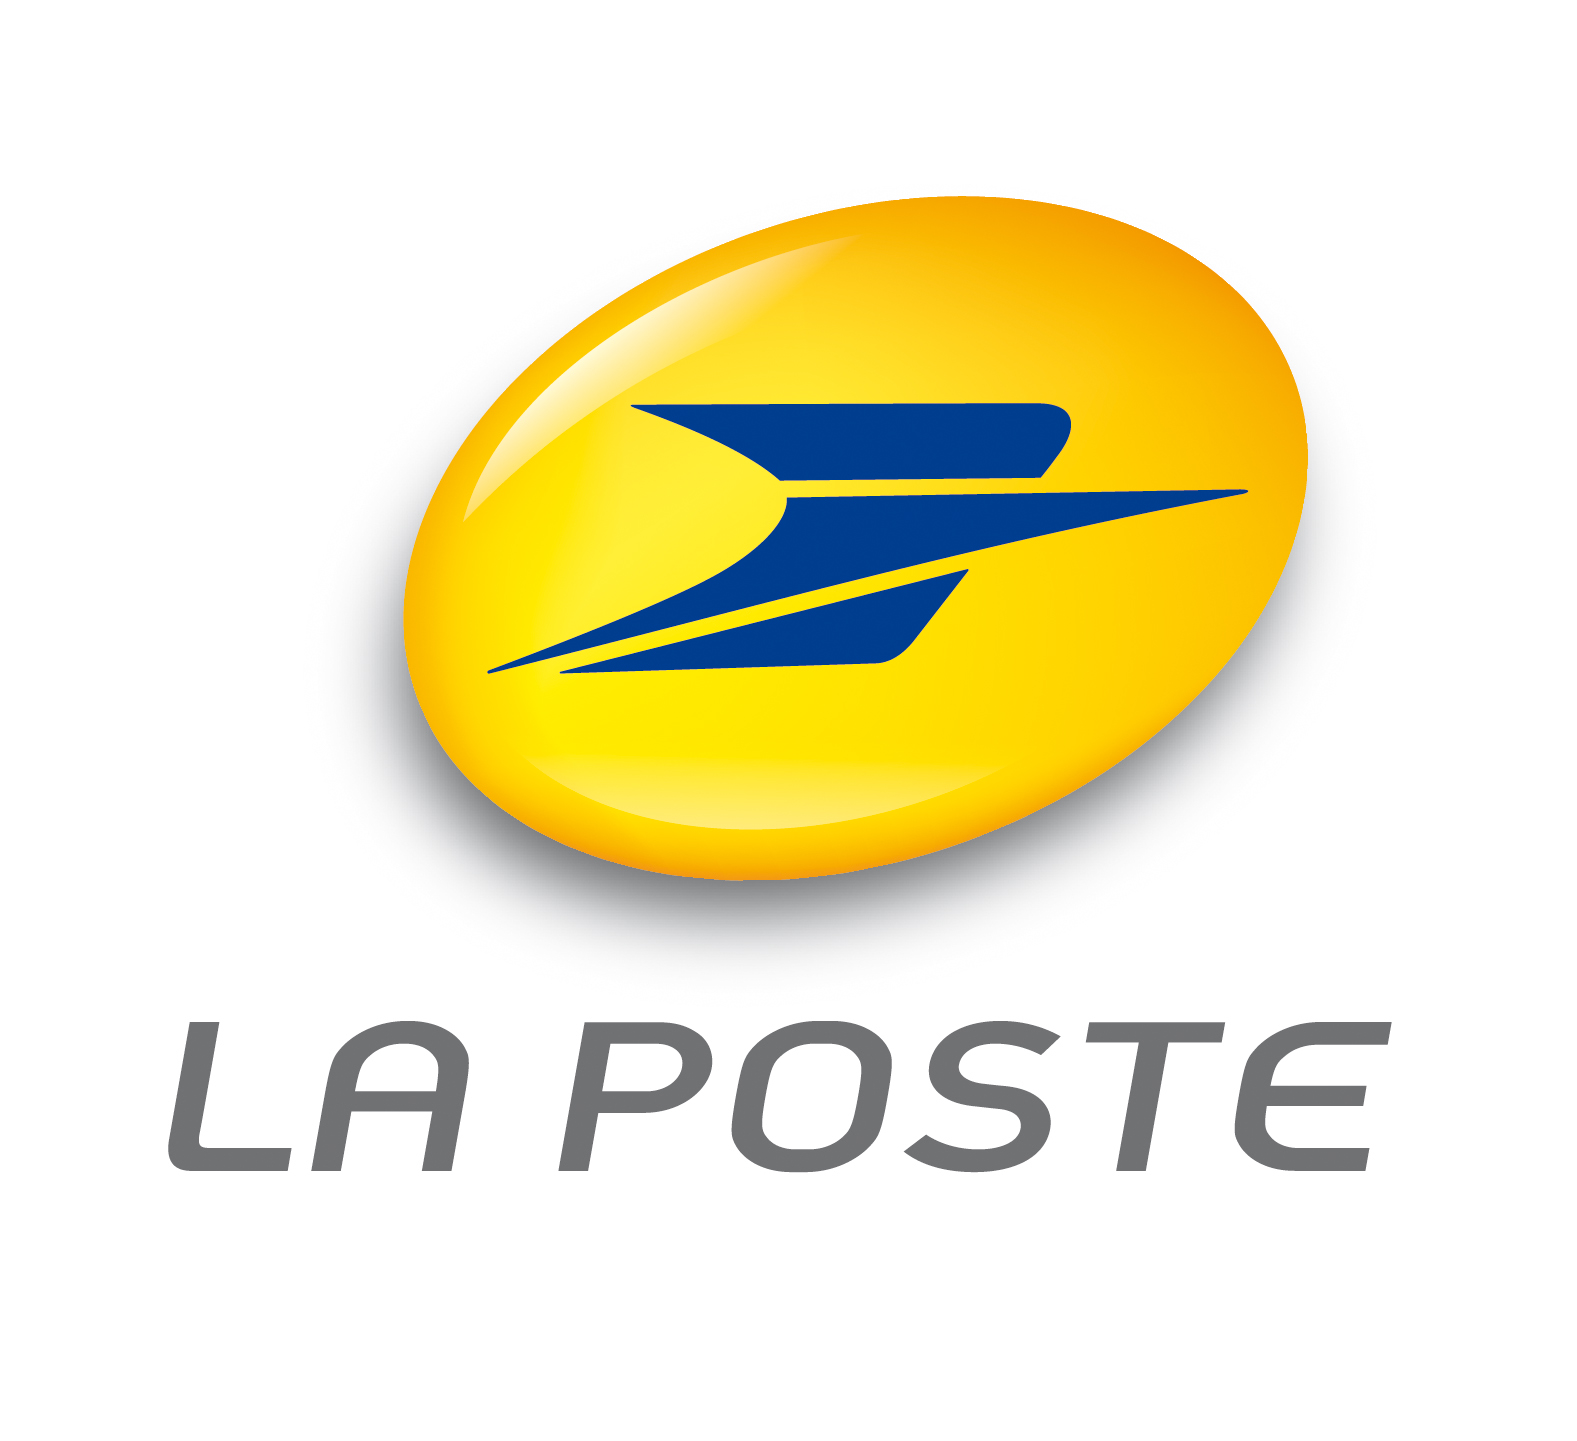 La Poste (Poste Office)